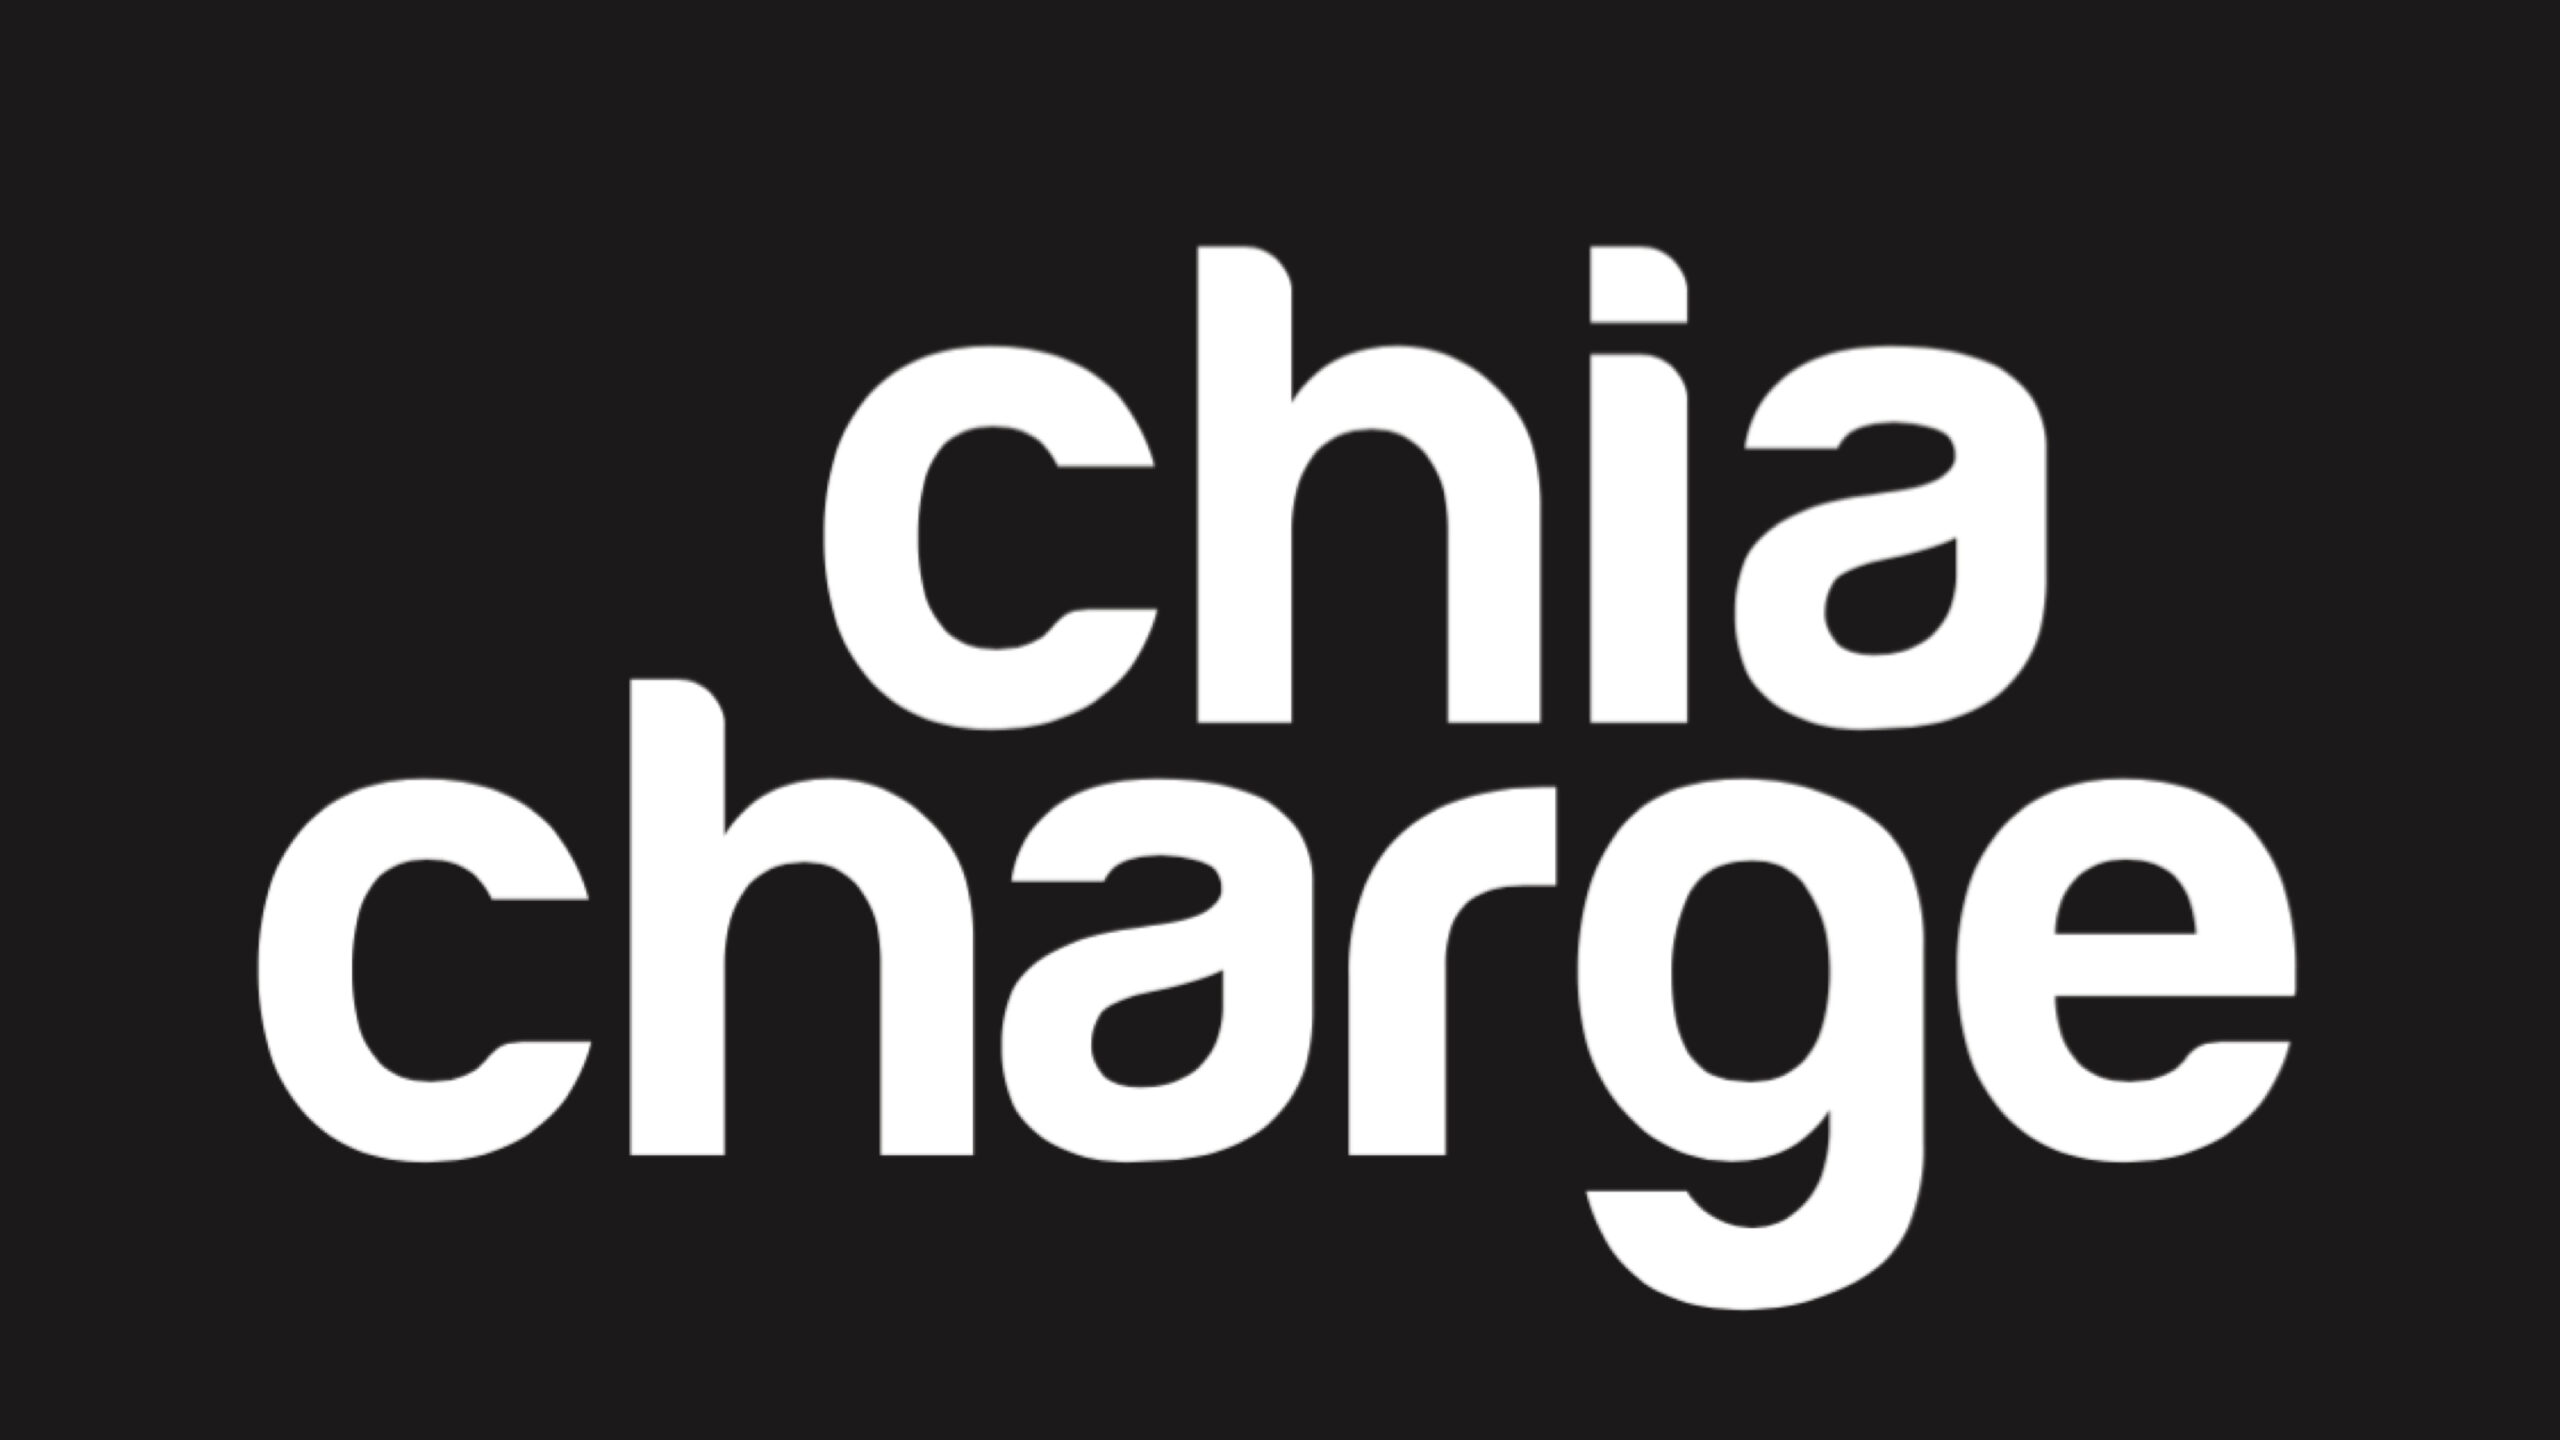 logo chia charge white font black background.001